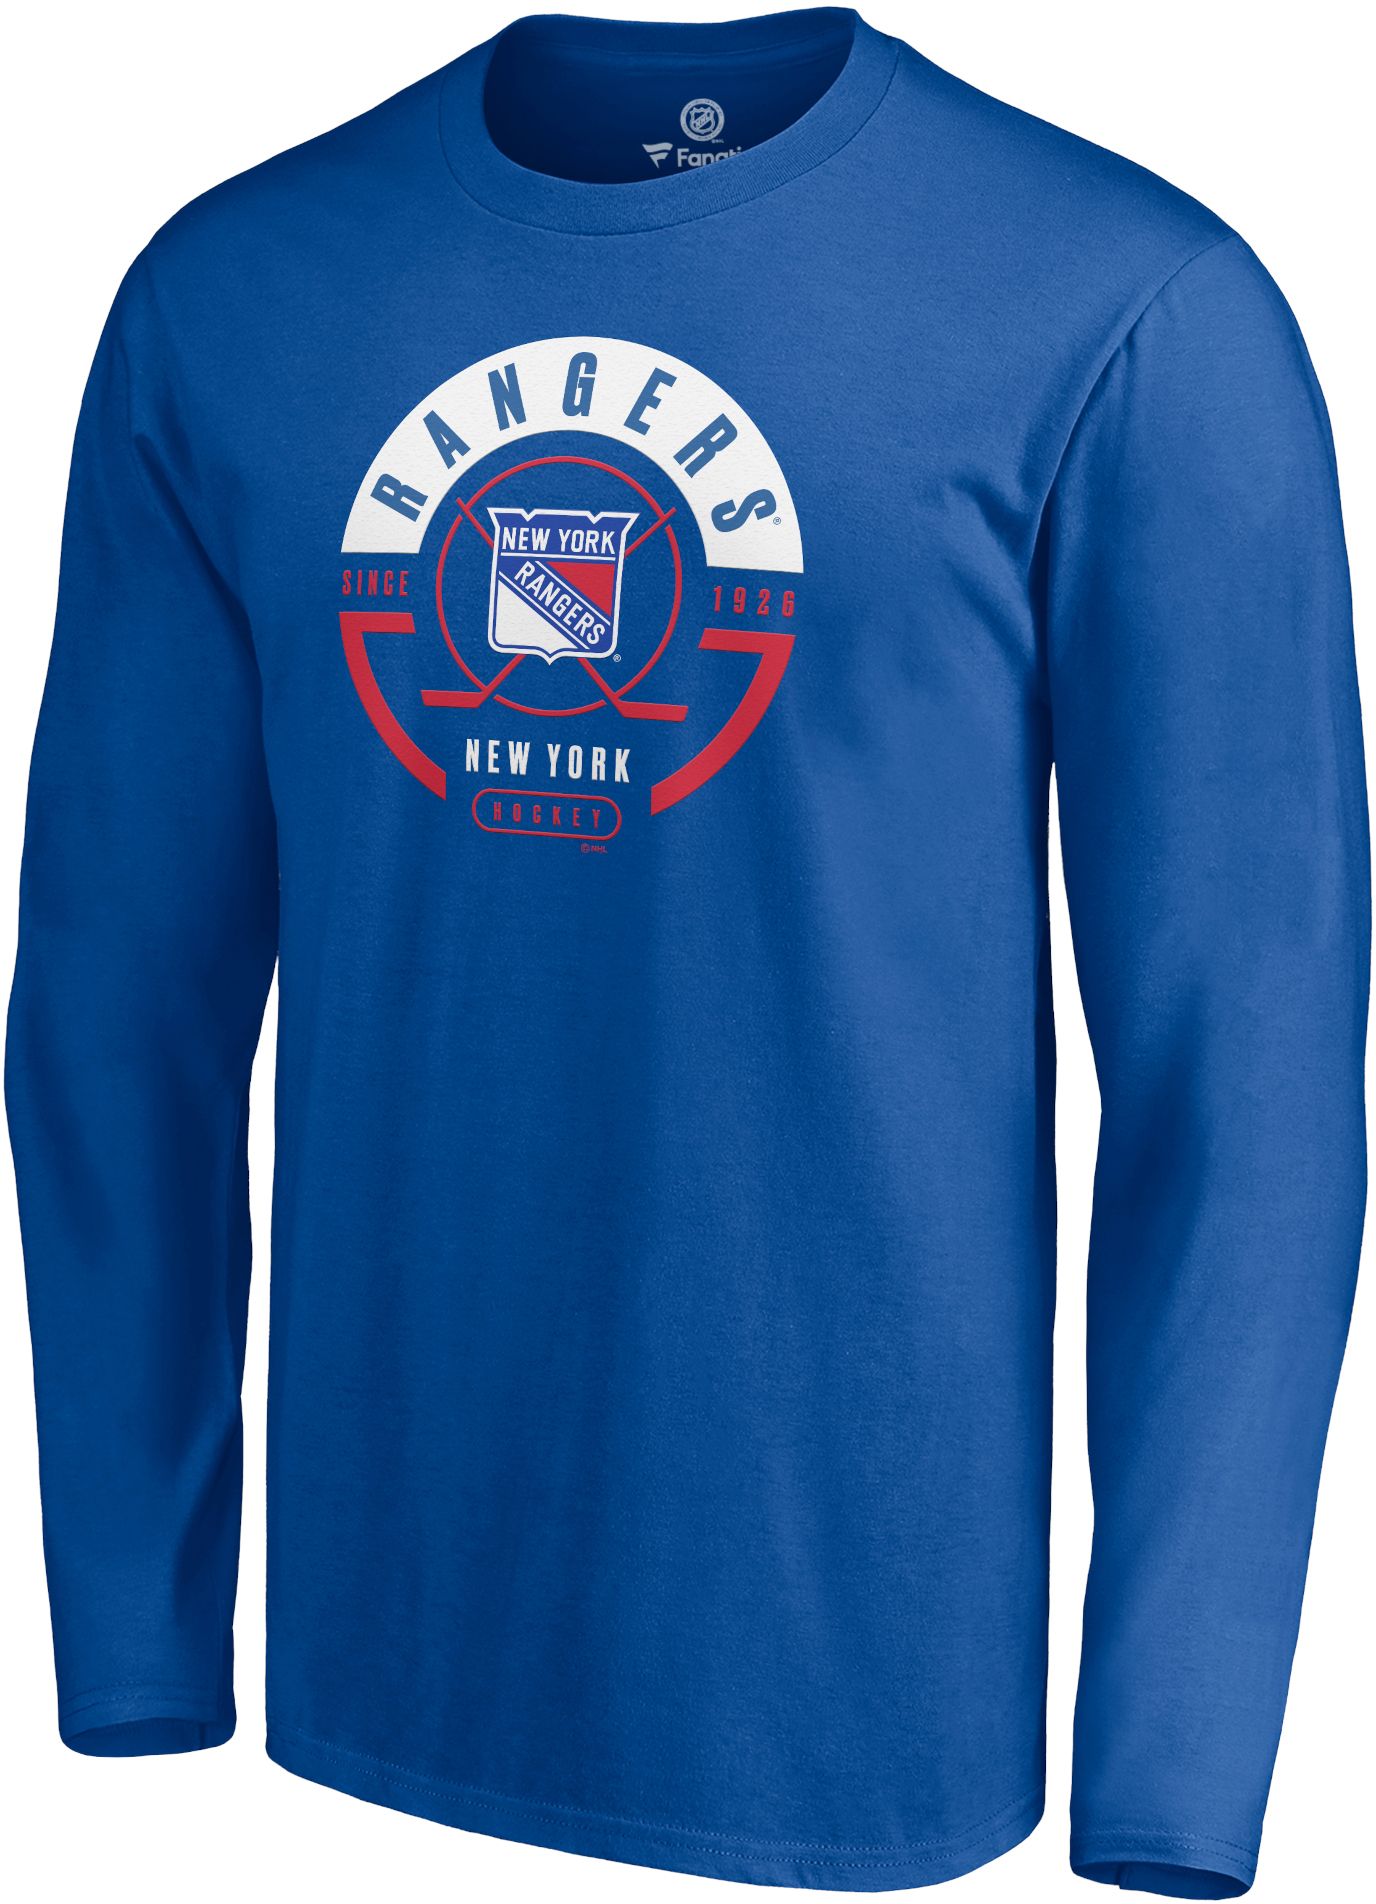 Fanatics Brand / NHL New York Rangers Change Blue T-Shirt